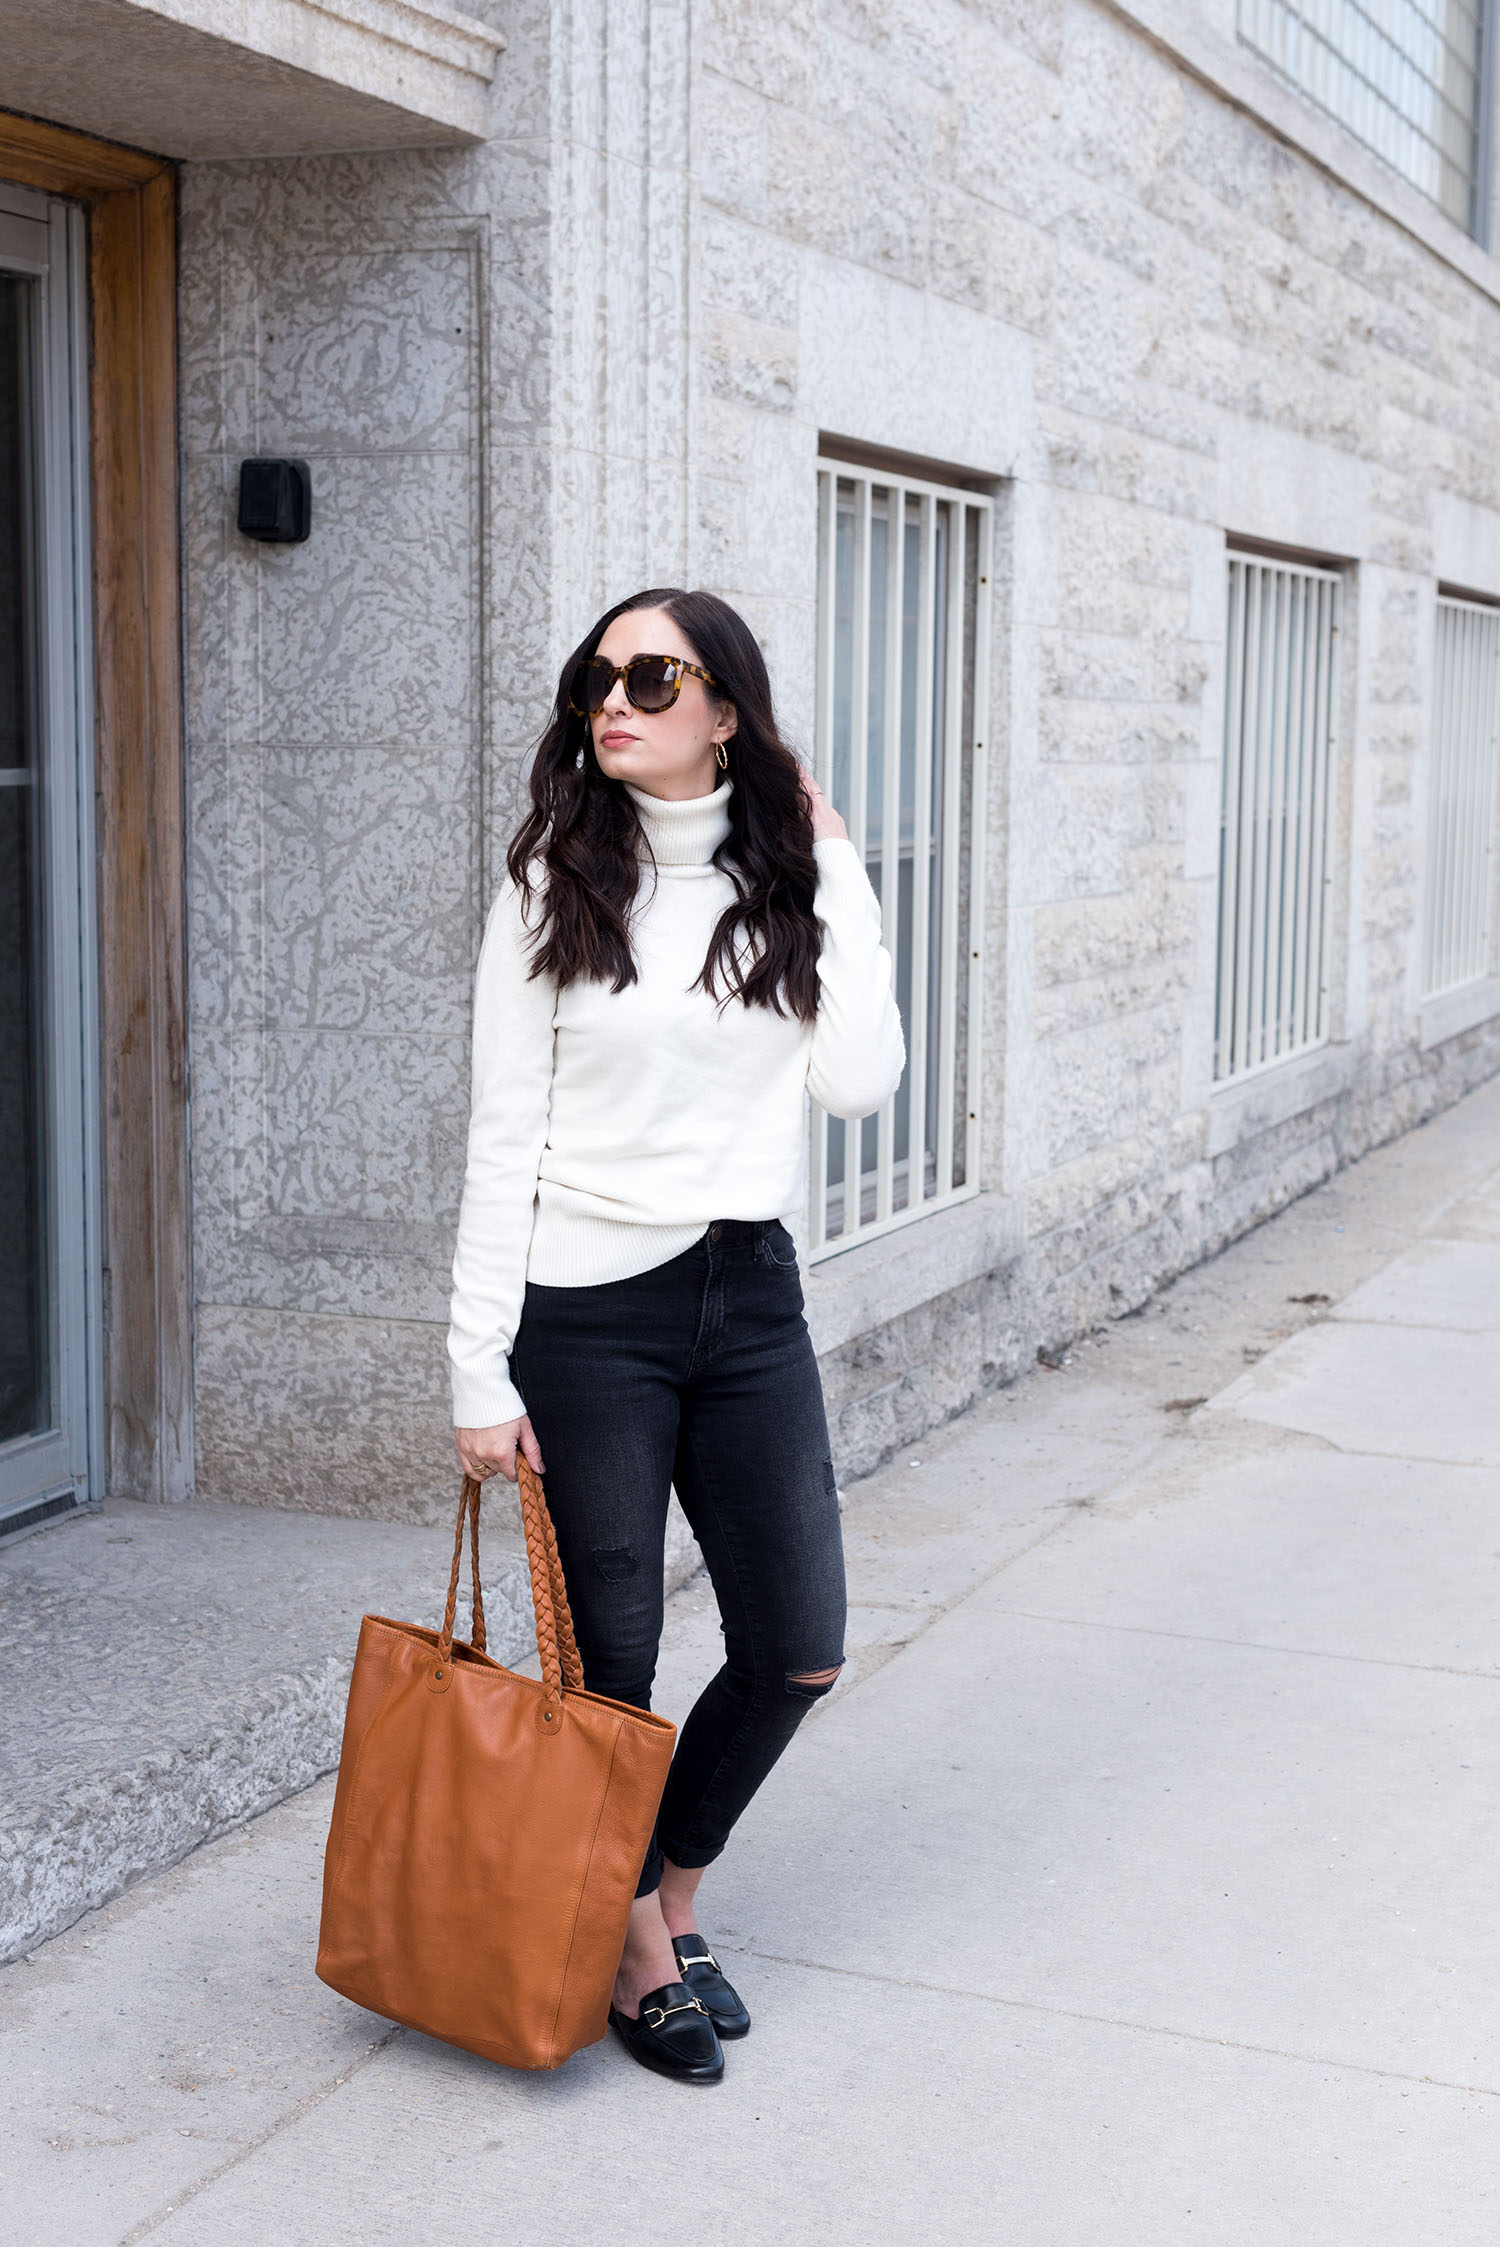 Canadian fashion blogger Cee Fardoe of Coco & Vera wears black Mavi jeans and carries a Les Composantes tote bag